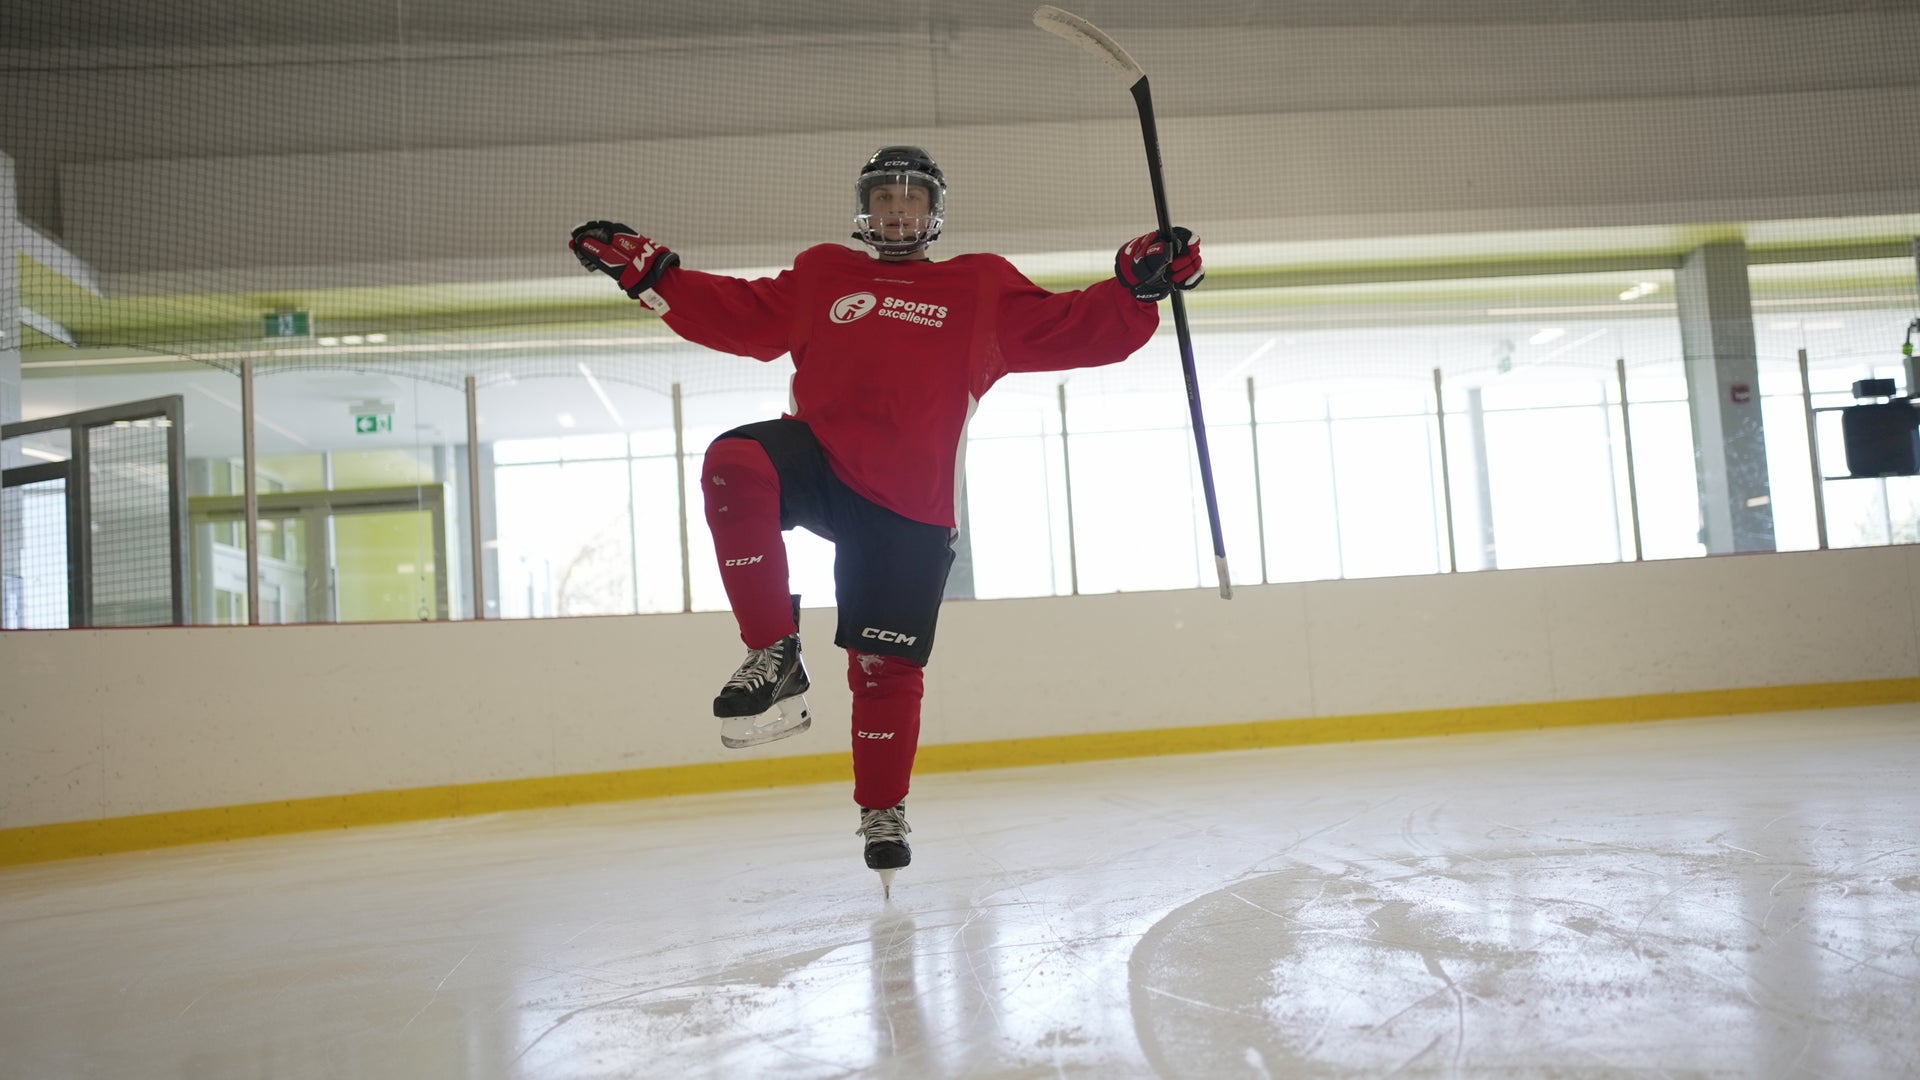 A hockey player wearing CCM hockey skates, CCM hockey skates and wearing a Sports Excellence Hockey jersey